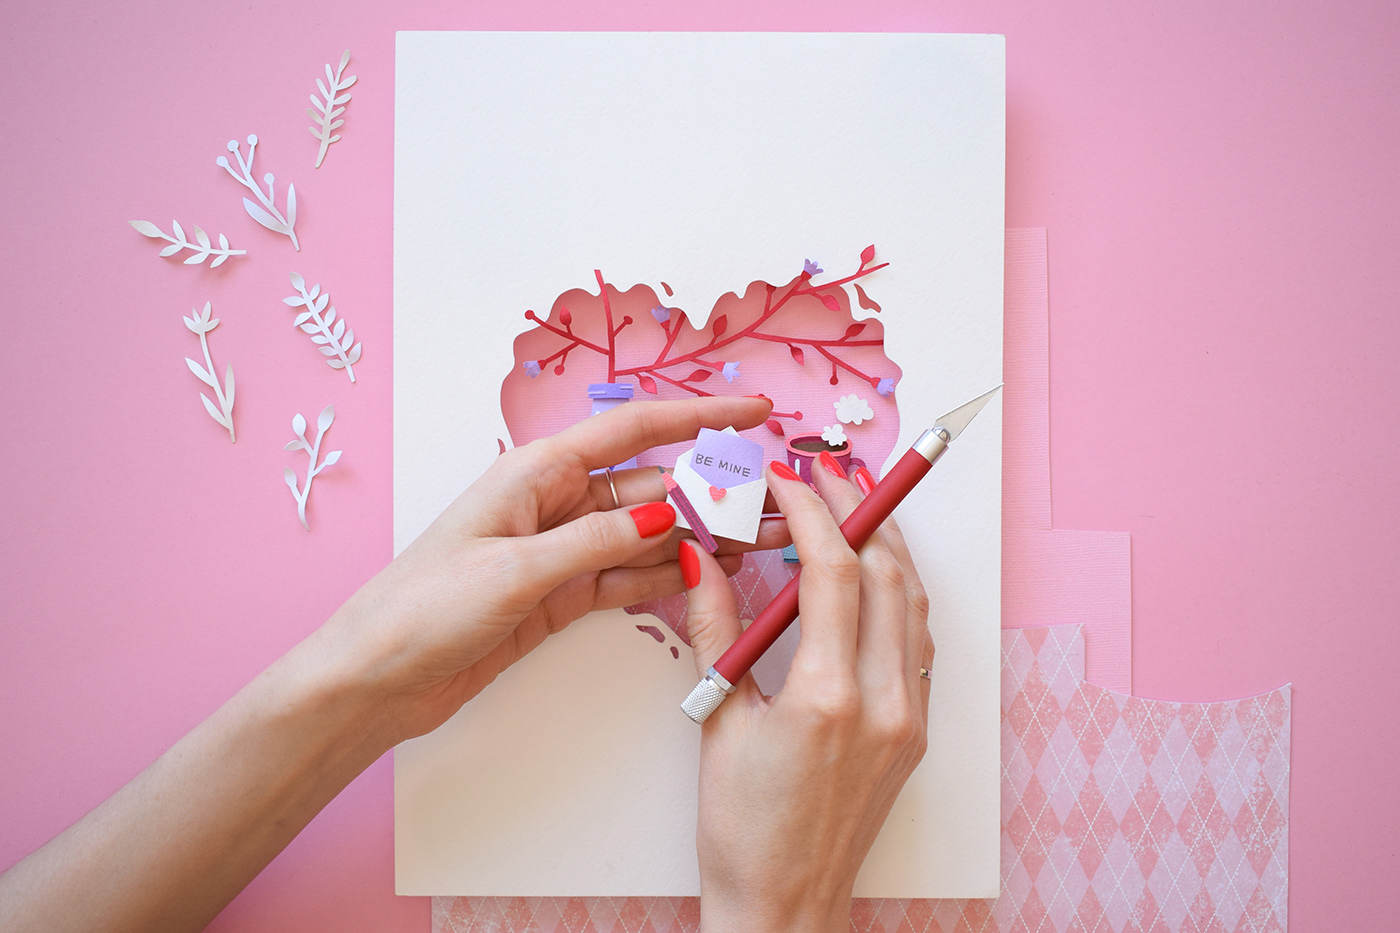 animator art handcrafted Miniature paper art paper artist paper craft paper cut art stop motion animation valentines day